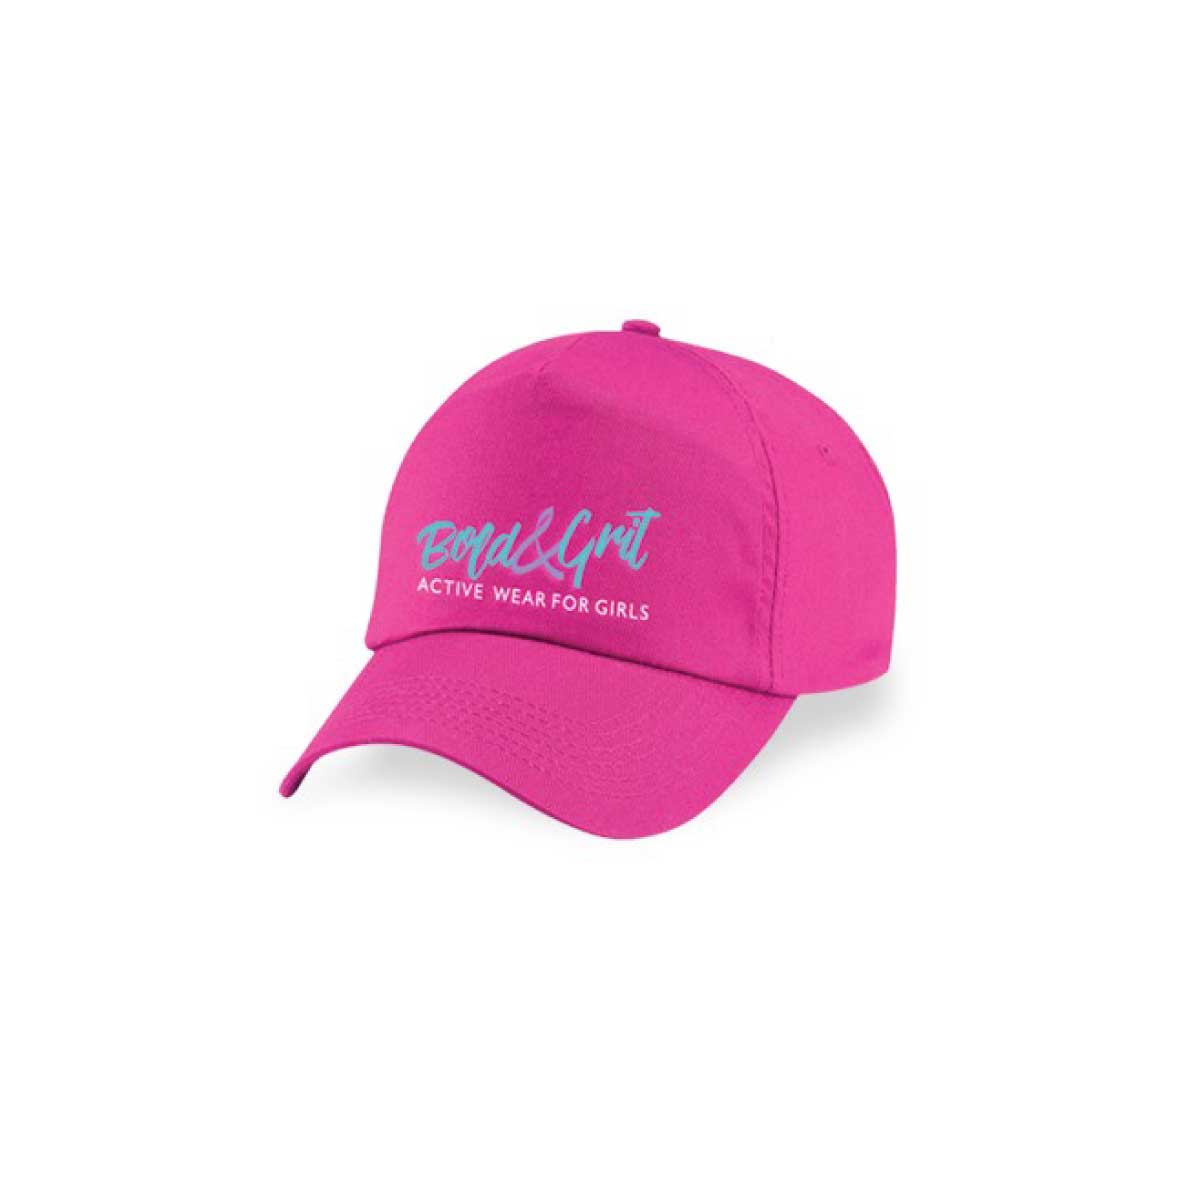 Bold&grit pink cap